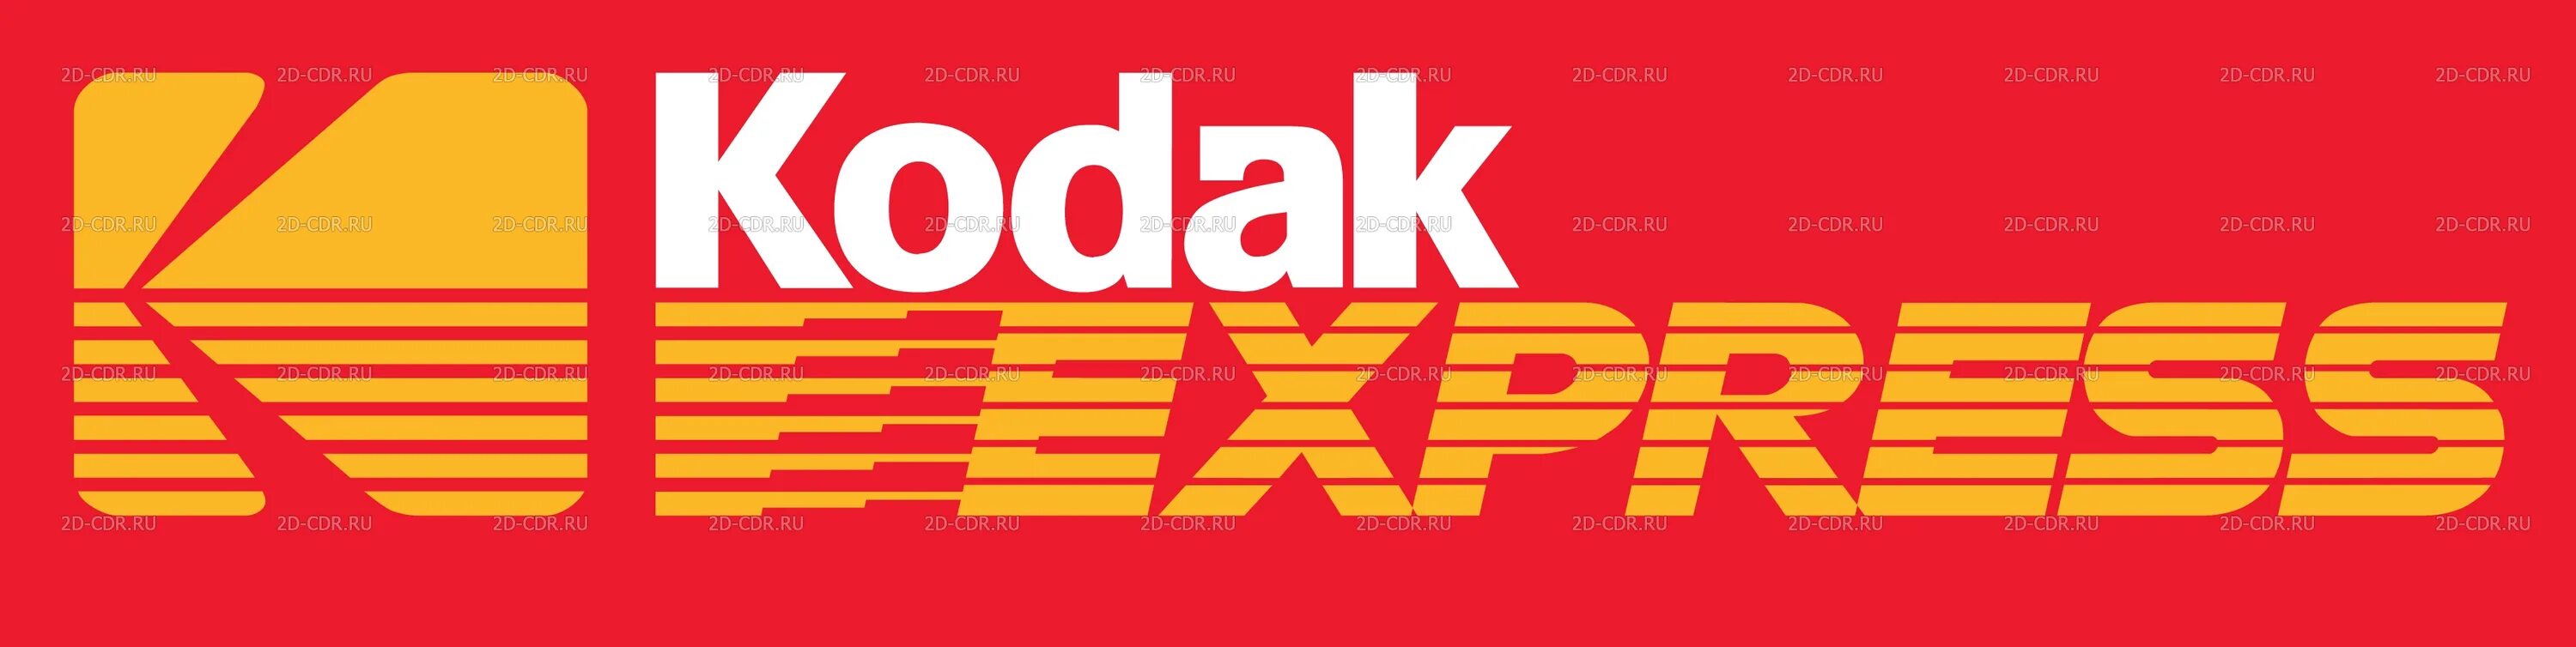 Кодак экспресс. Kodak логотип. Кодак Express. Кодак экспресс фото. Логотип Kodak Express вектор.